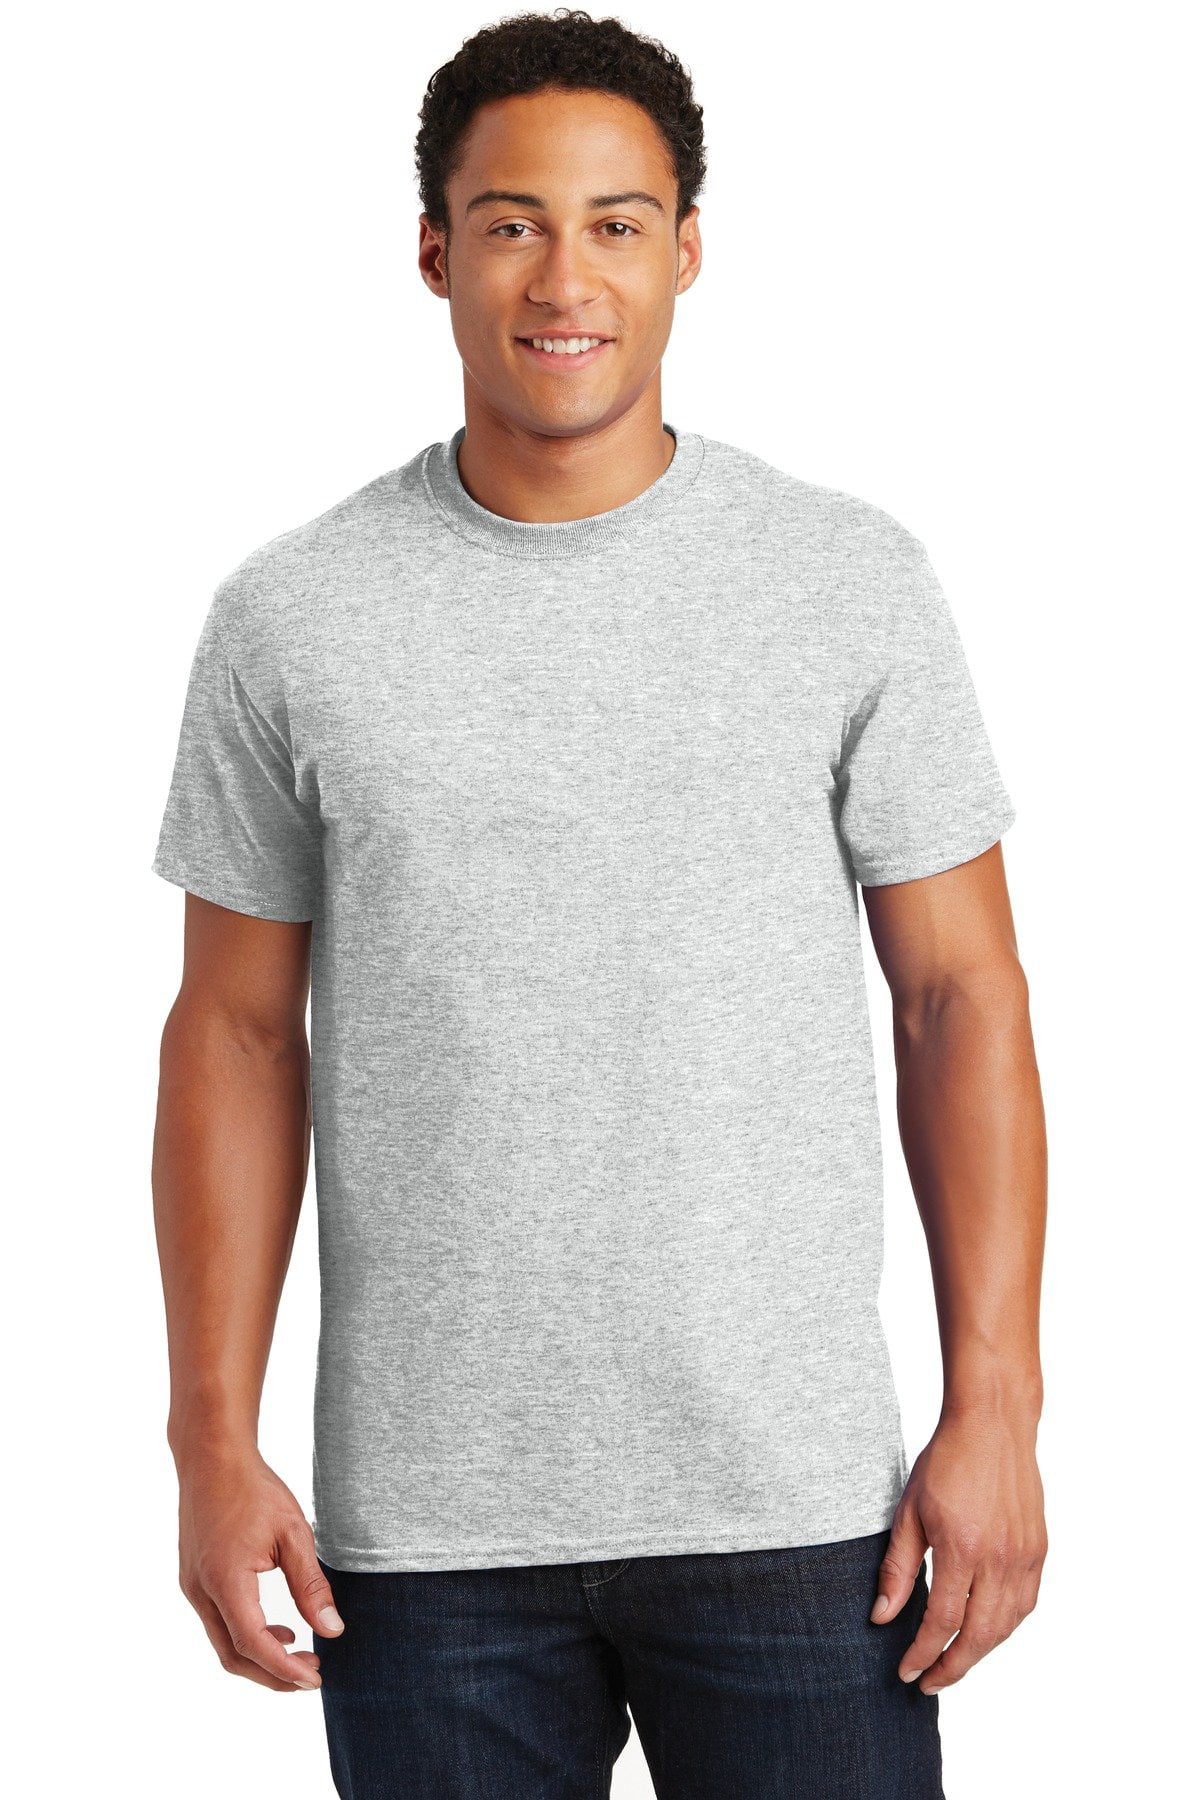 Gildan Adult Ultra Cotton T-Shirt, Style G2000, Multipack, Ash Grey 2-Pack,  2X-Large 